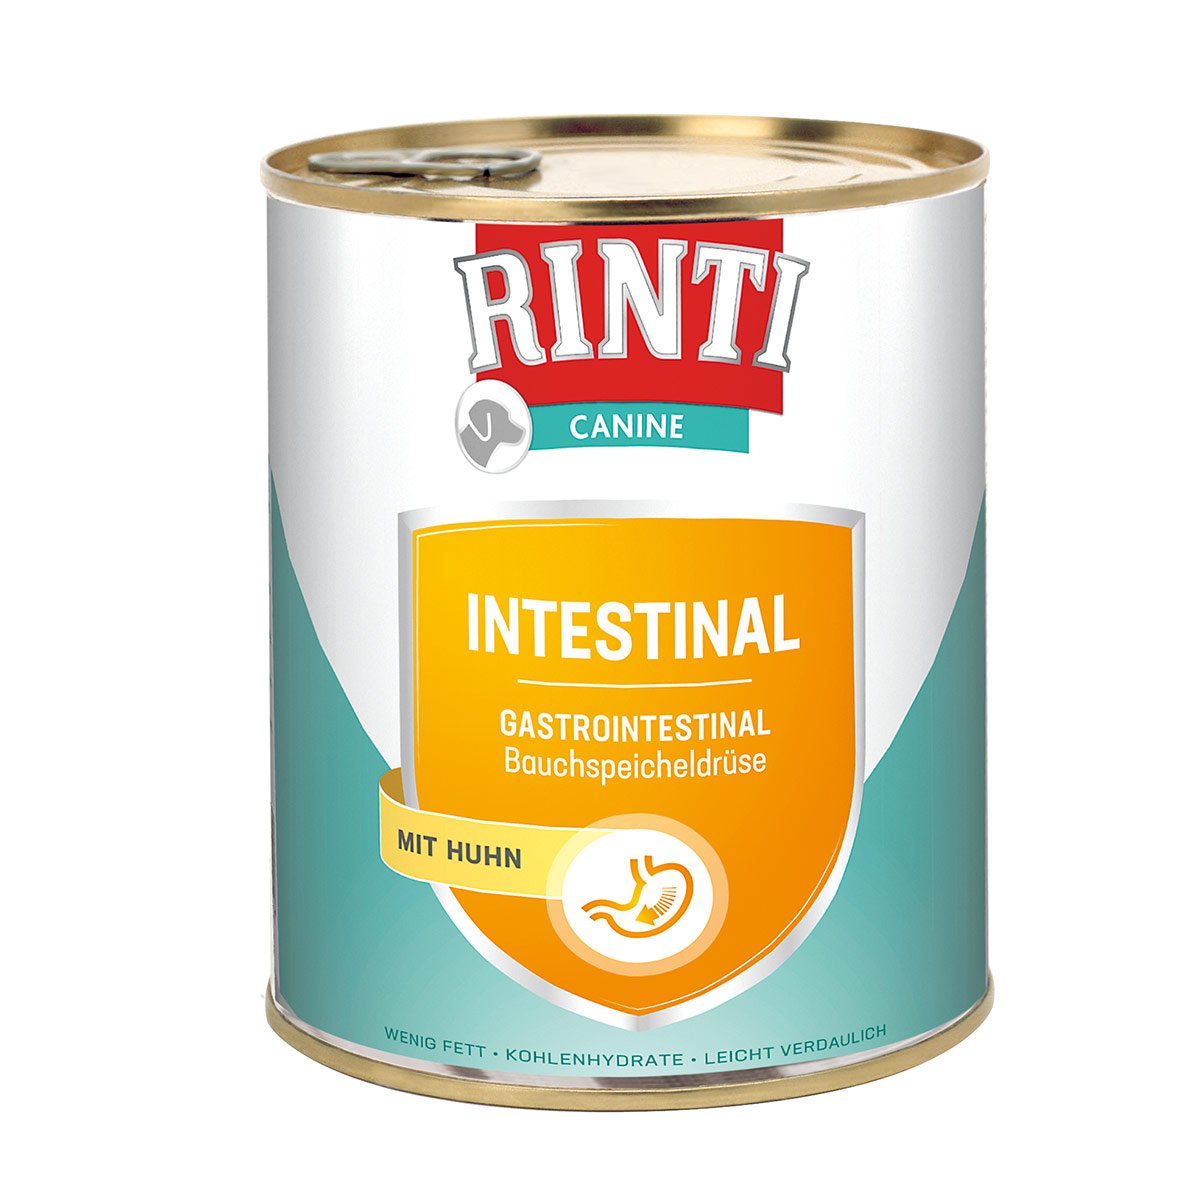 Rinti Canine Intestinal Huhn 12x800g von Rinti